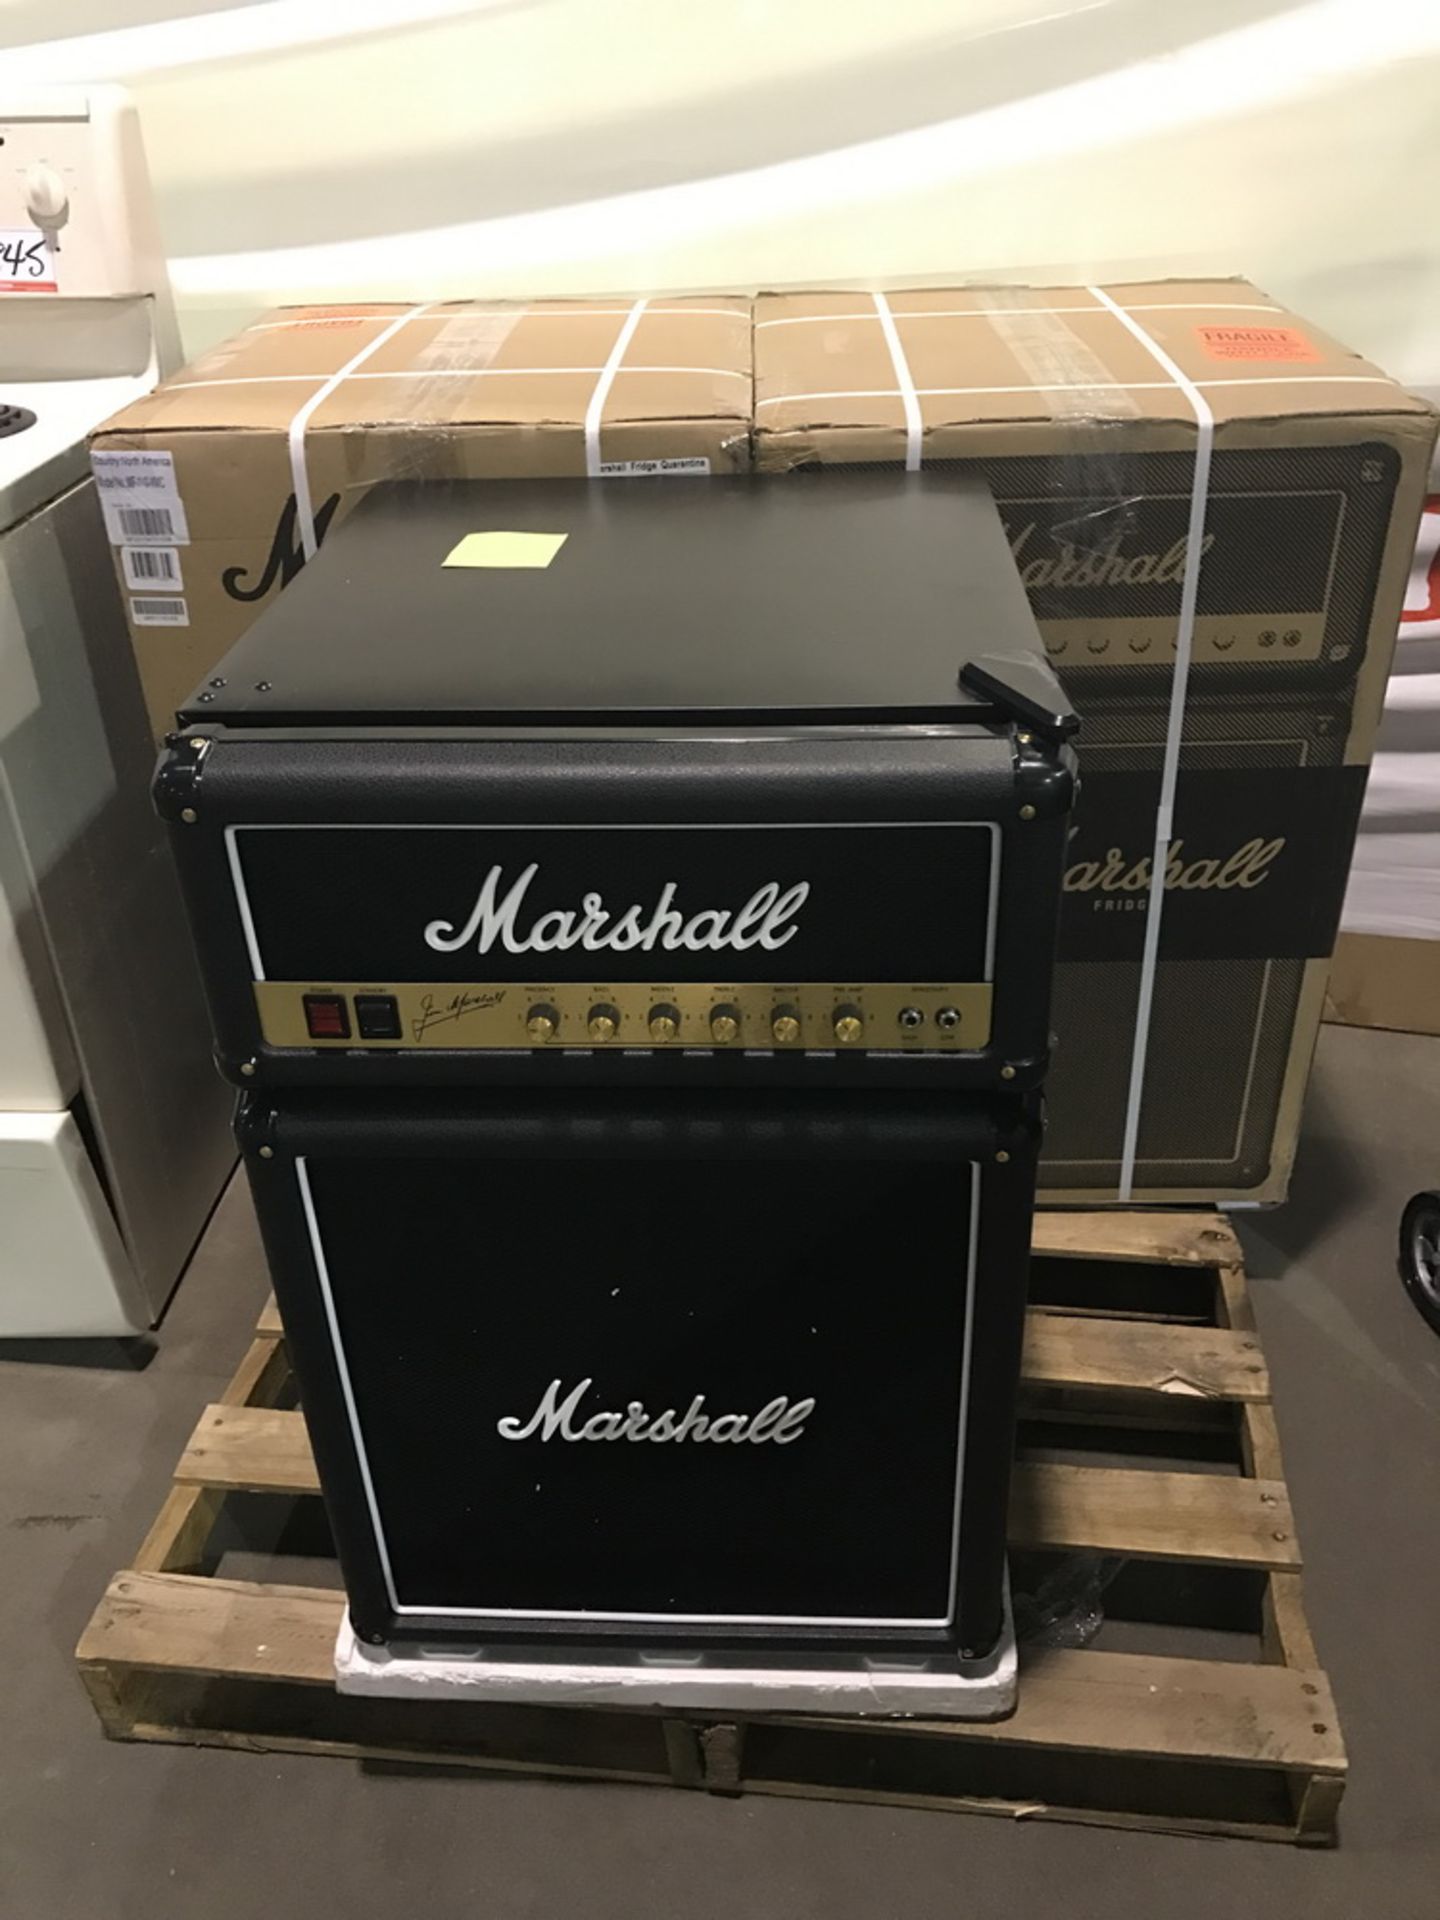 NEW IN BOX - MARSHALL AMP BAR FRIDGE